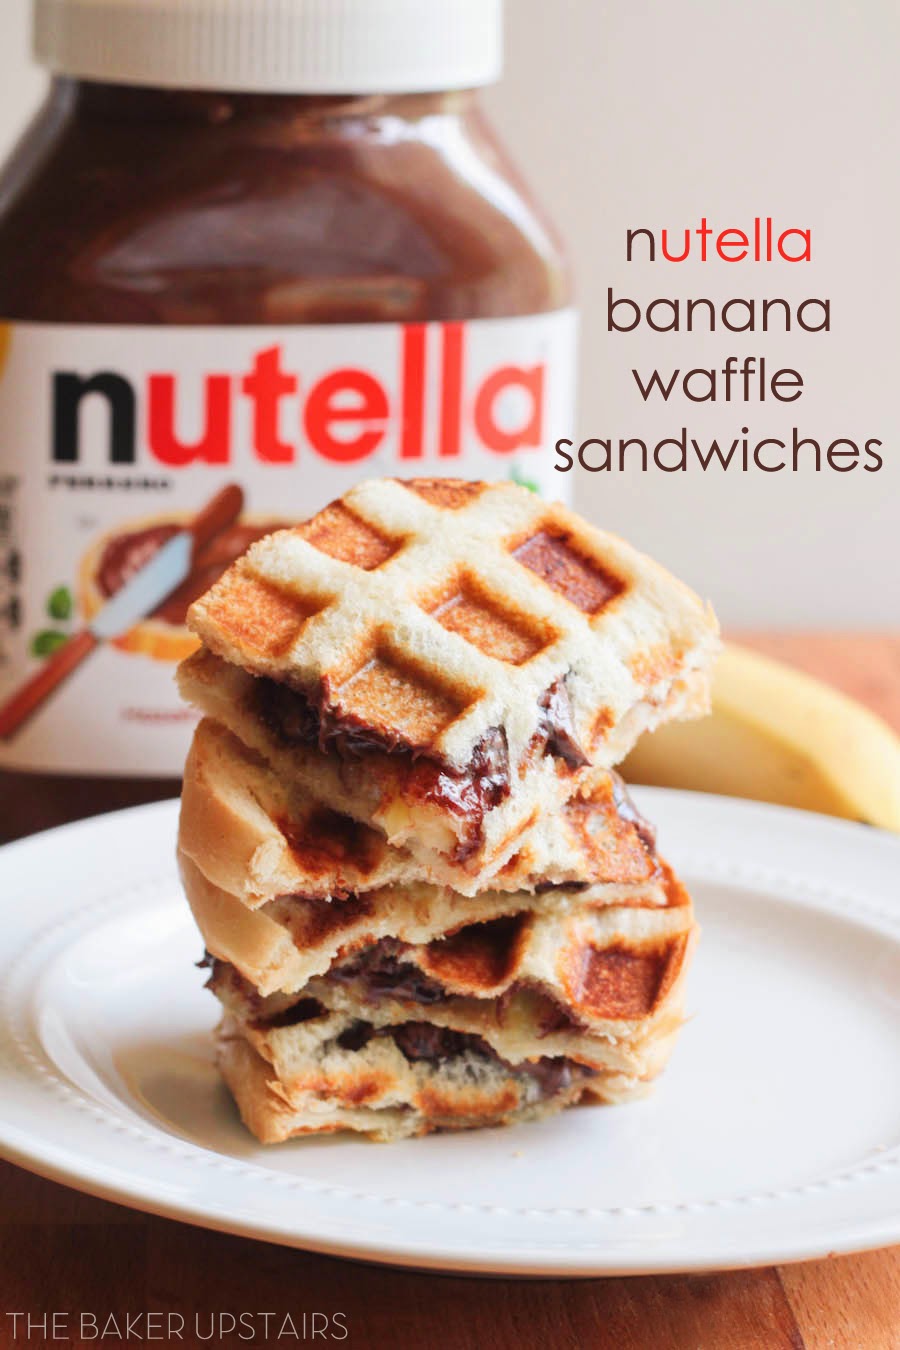 Nutella banana waffle sandwiches